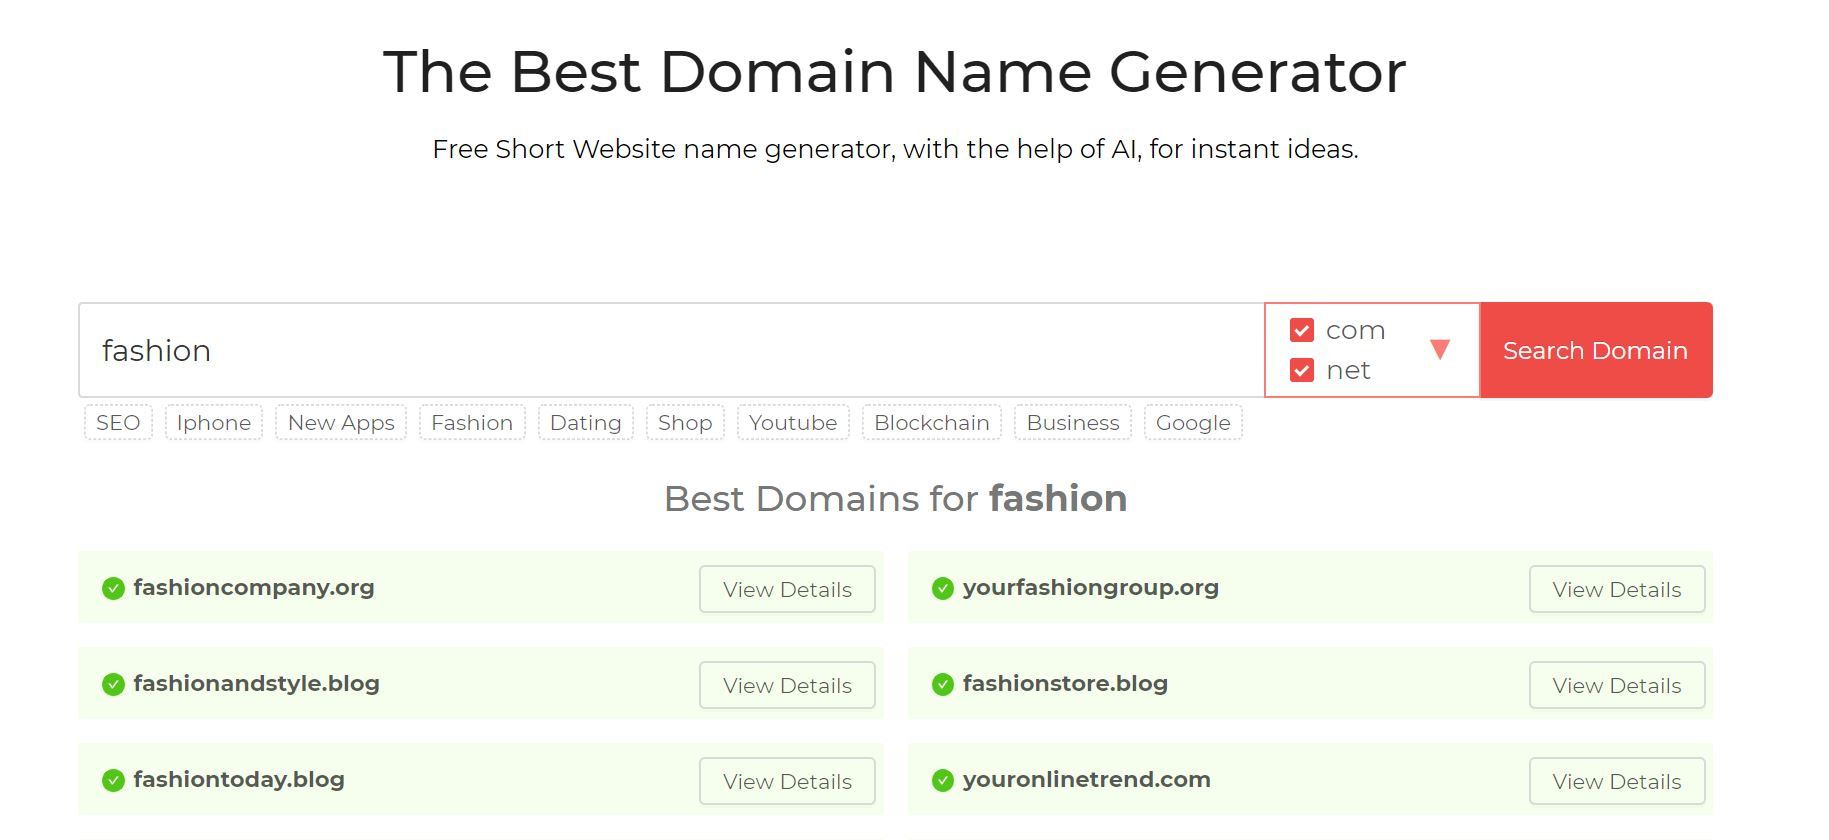 The DomainWheel domain name generator.